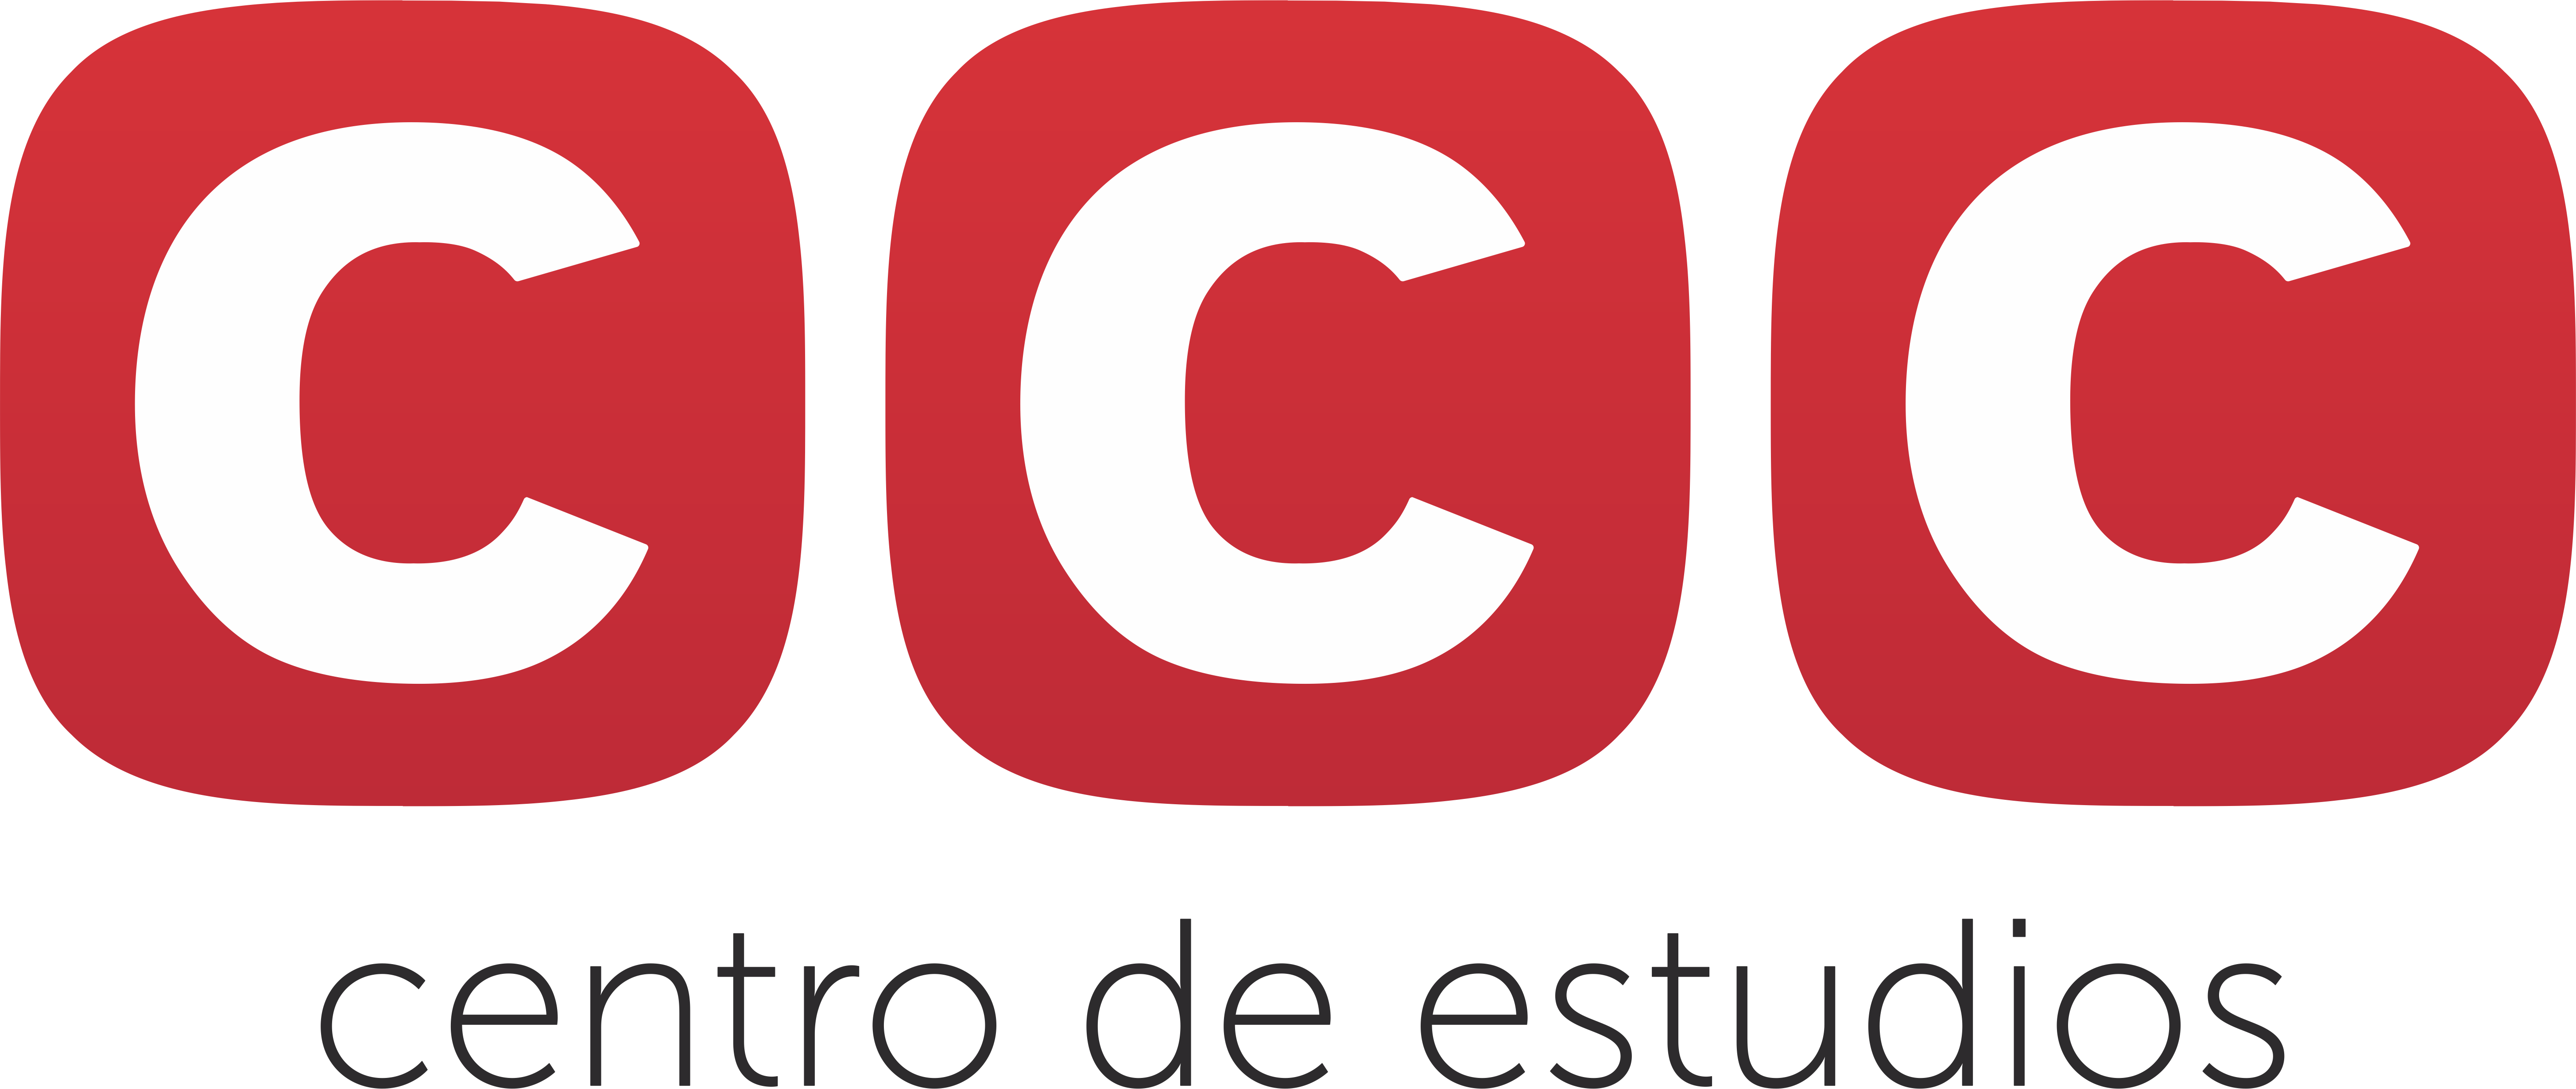 logo ccc2